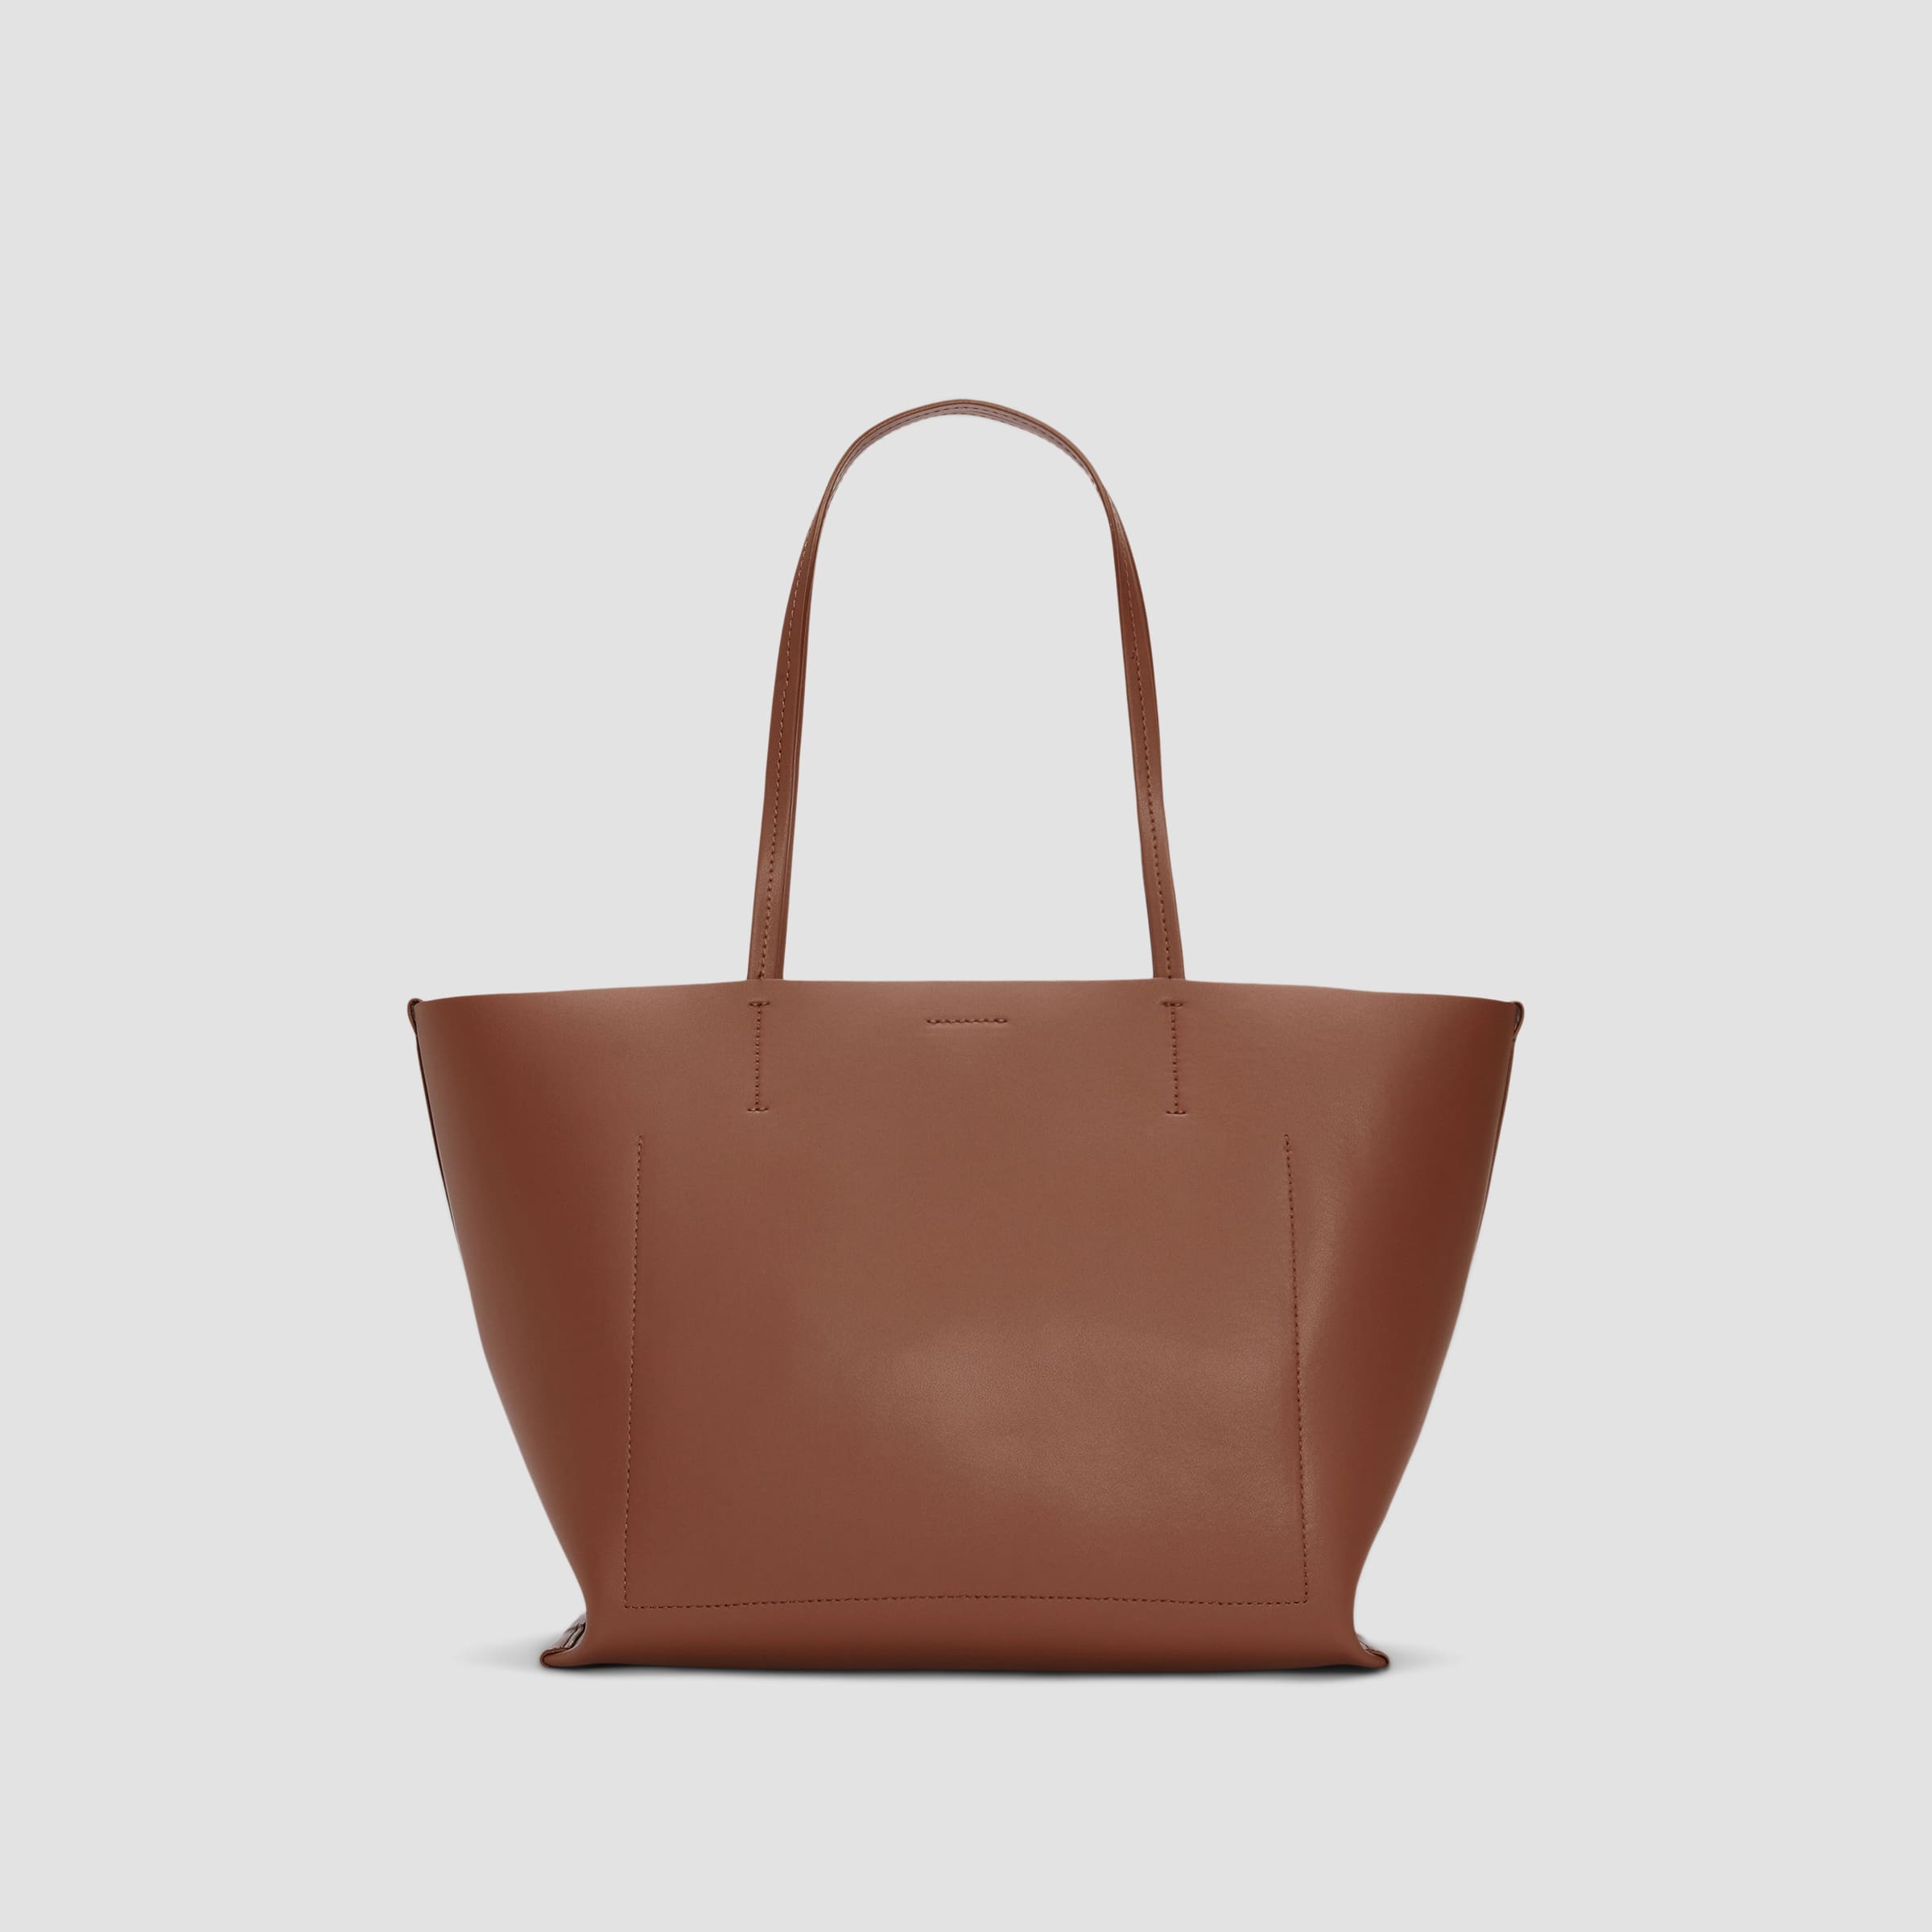 Simple Leather Bag Medium Tote Tan Leather Shoulder Bag 